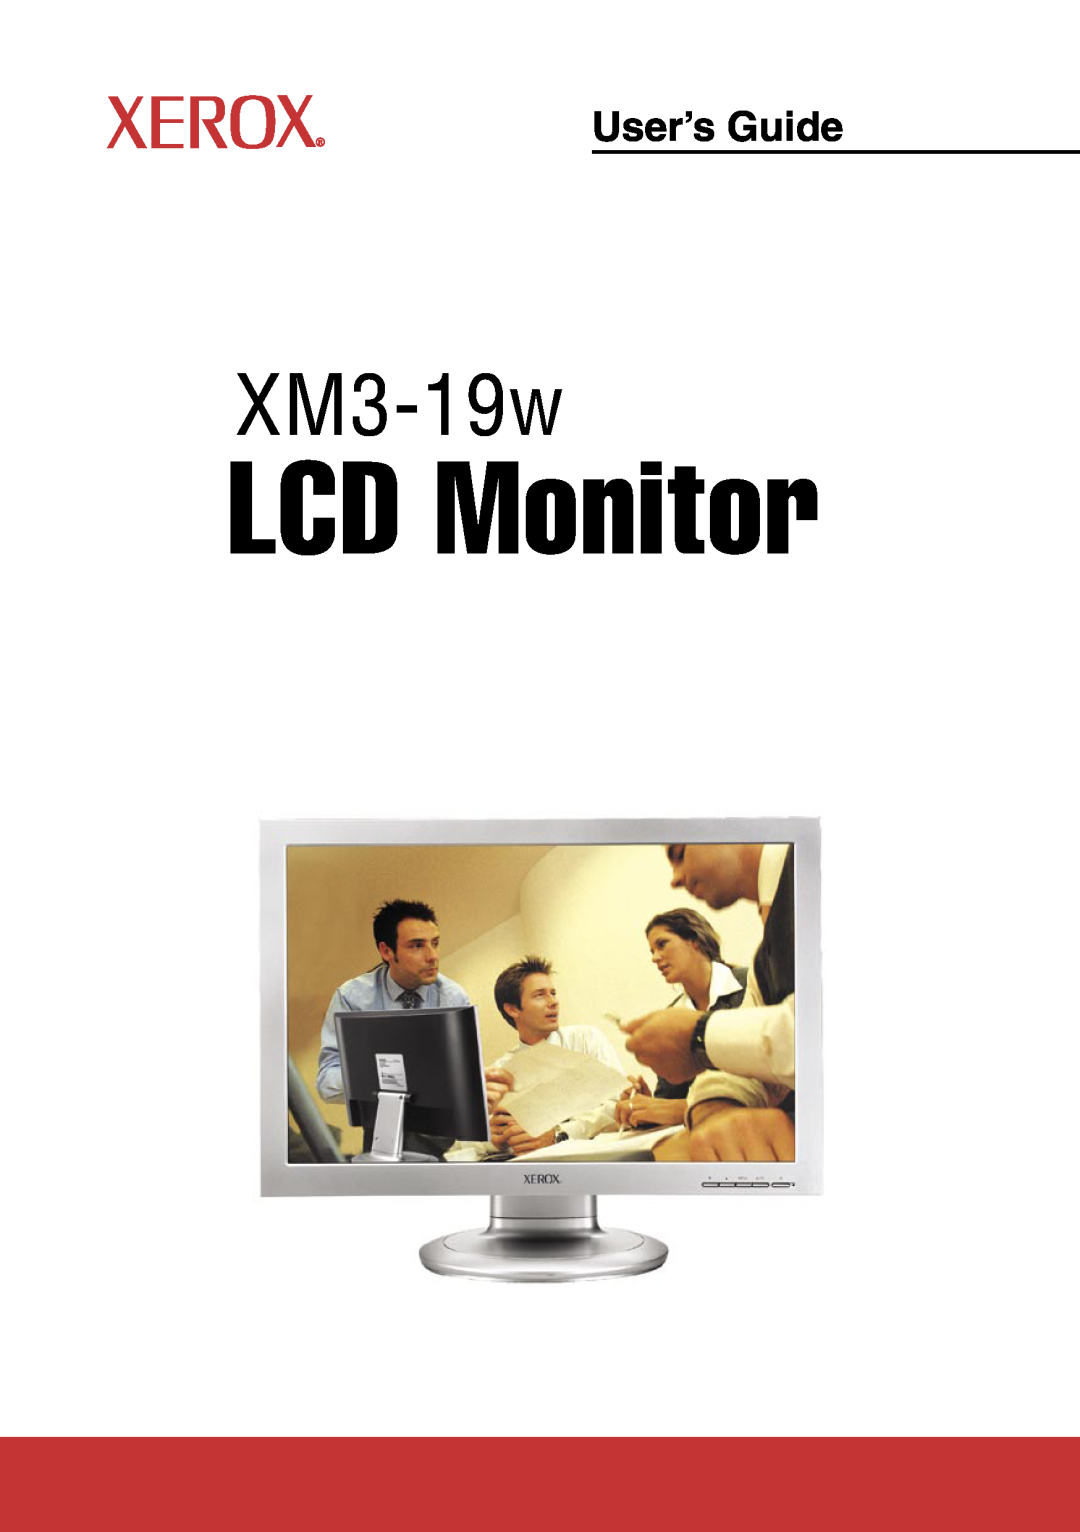 Xerox XM3-19w manual LCD Monitor, User’s Guide 